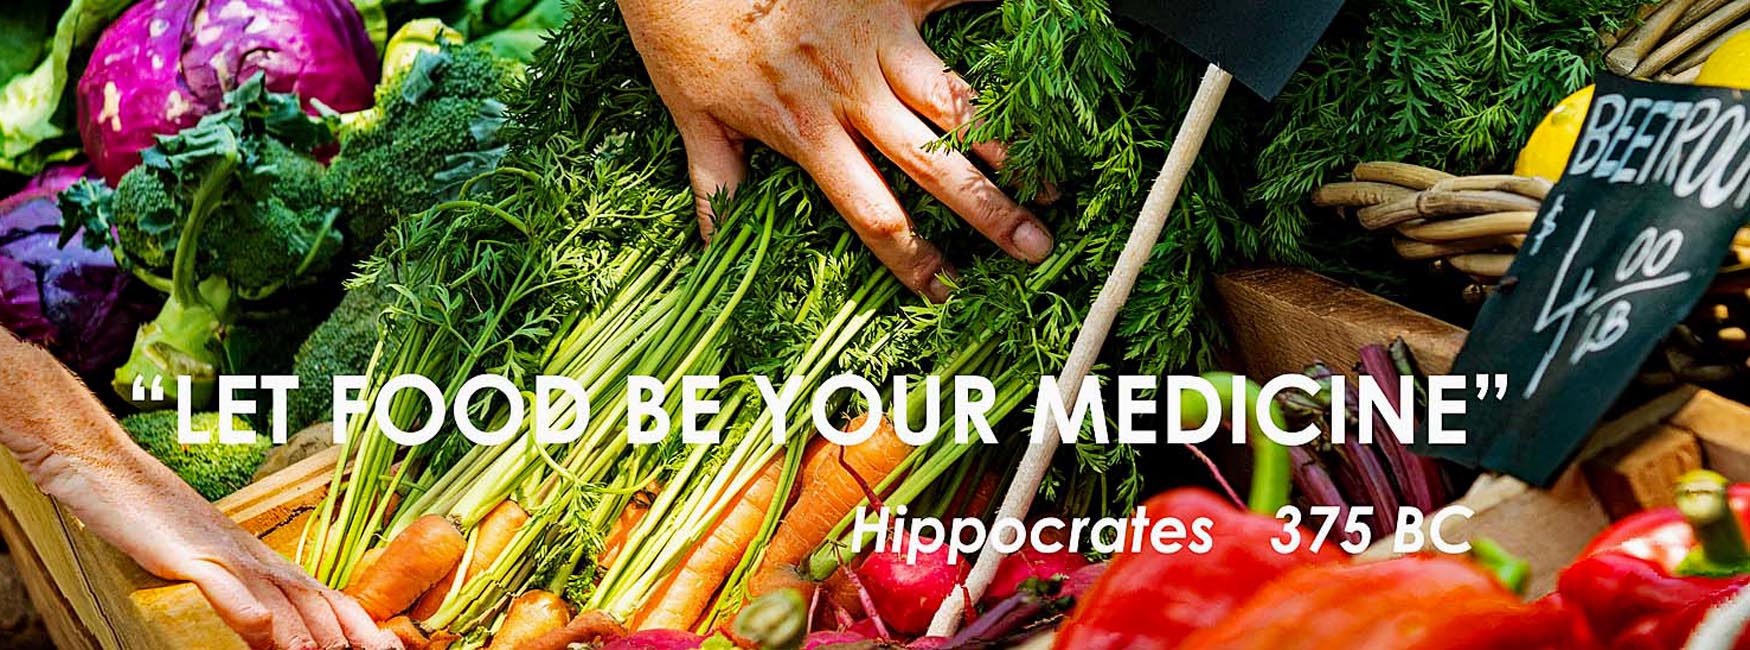 Let Food Be Your Medicine - Hippocrates 375 BC - vegetables at the market